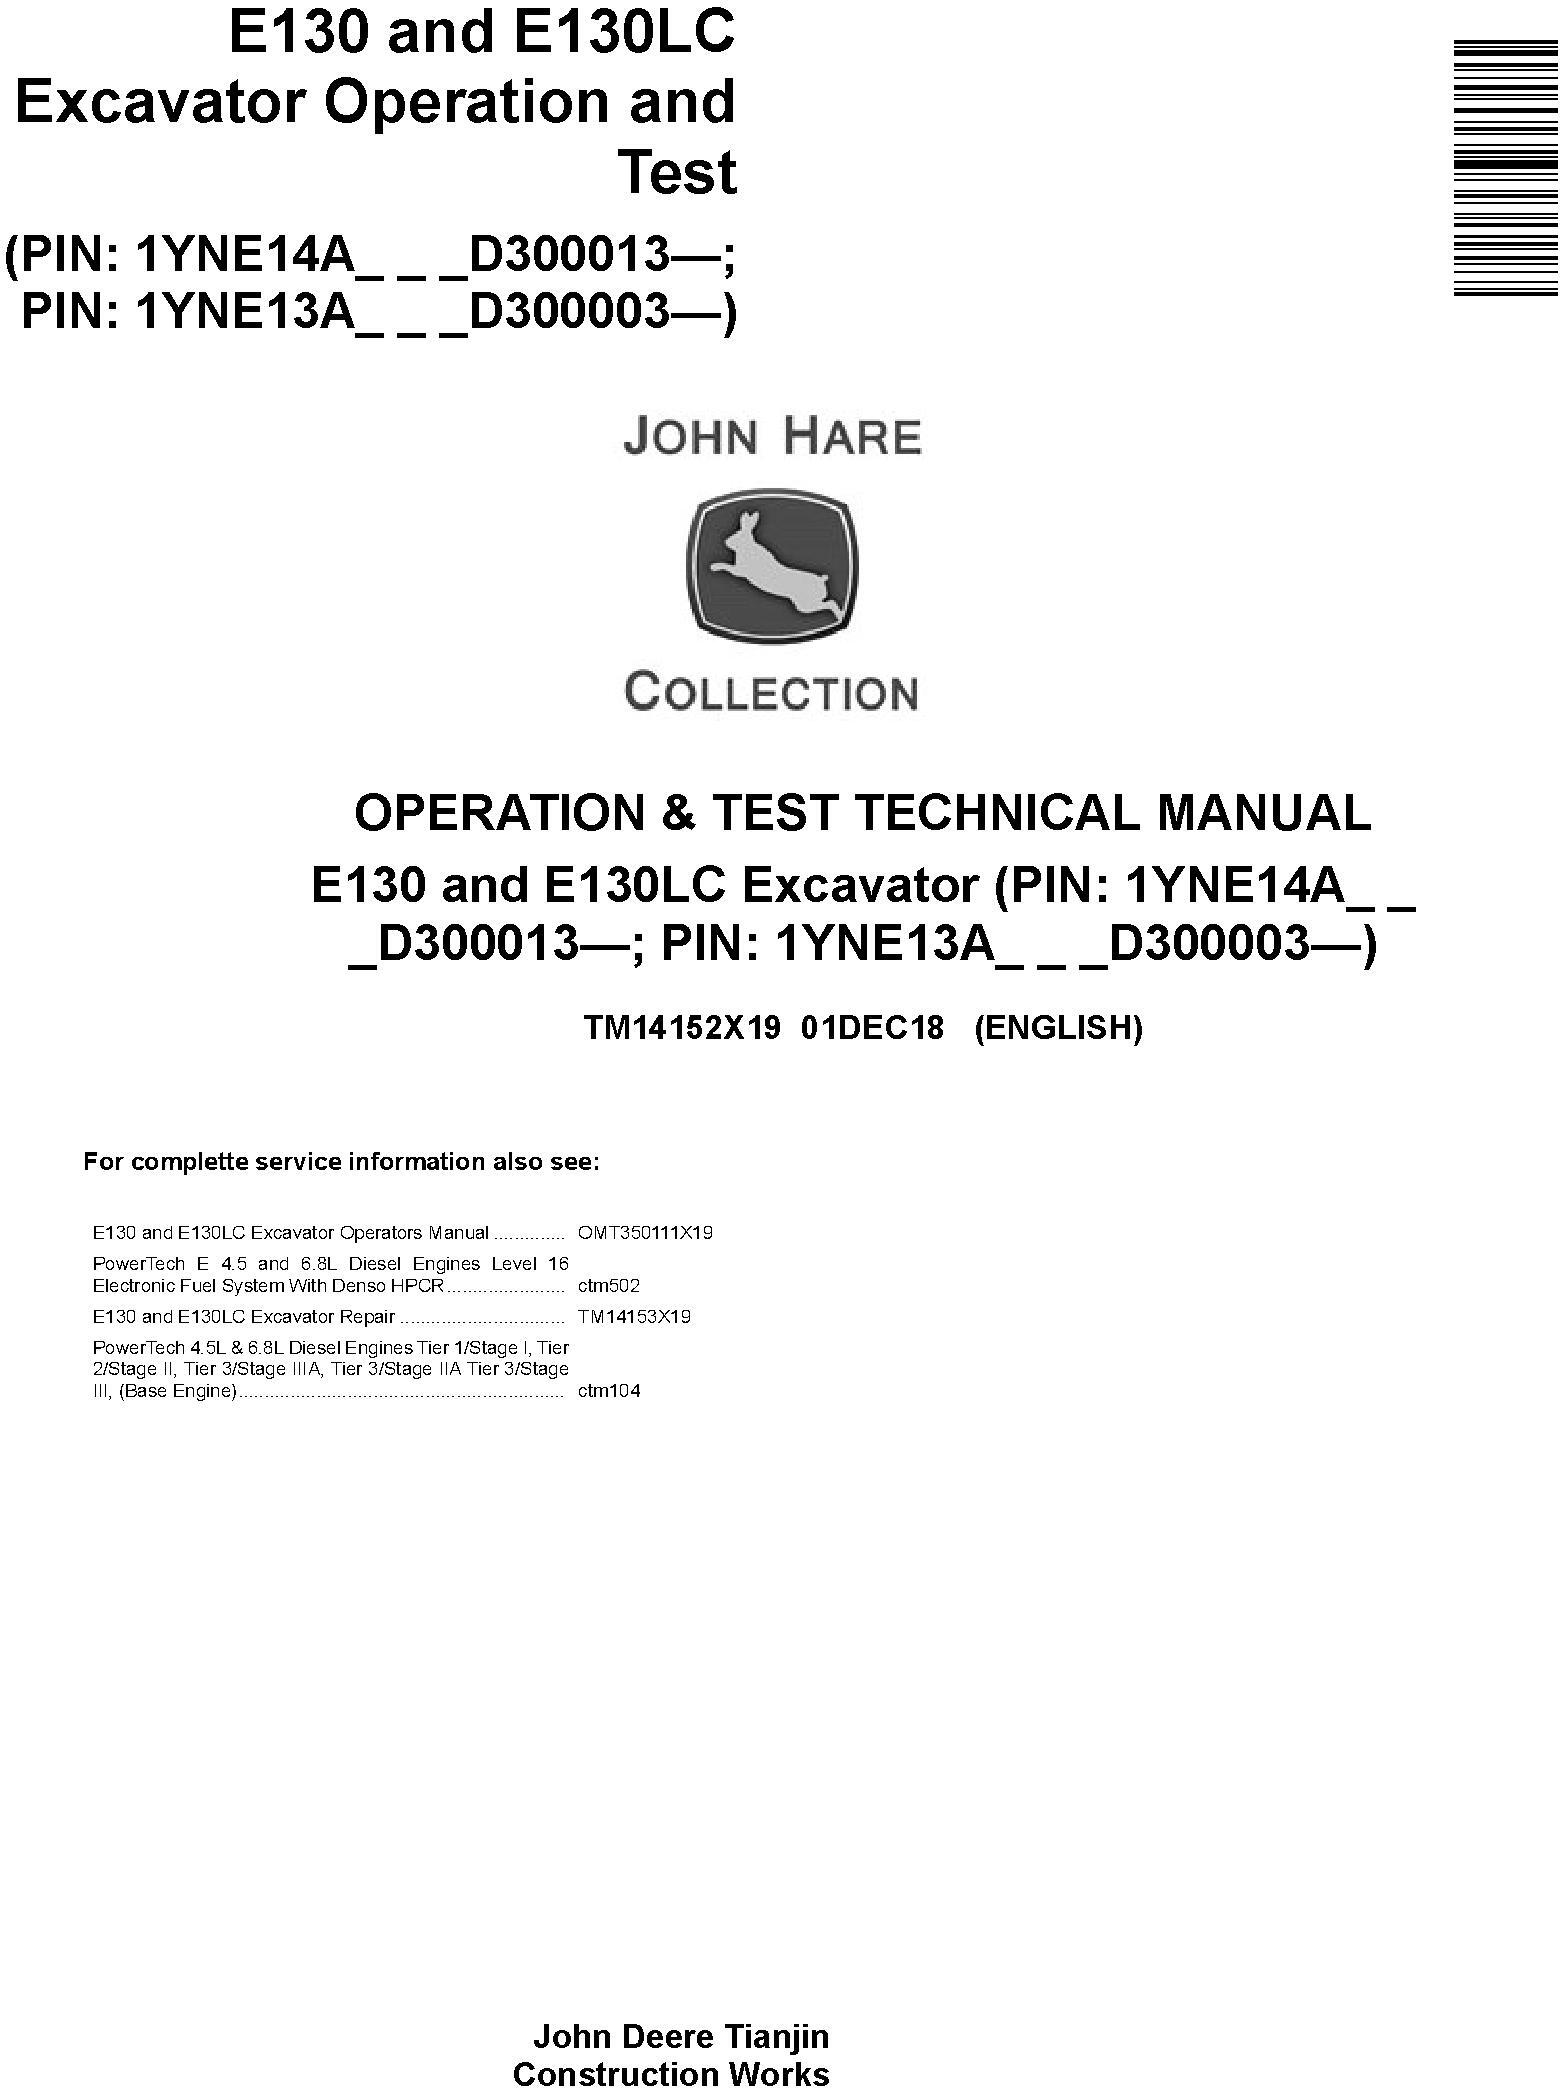 John Deere E130, E130LC (SN.from D300013) Excavator Operation & Test Technical Manual (TM14152X19)